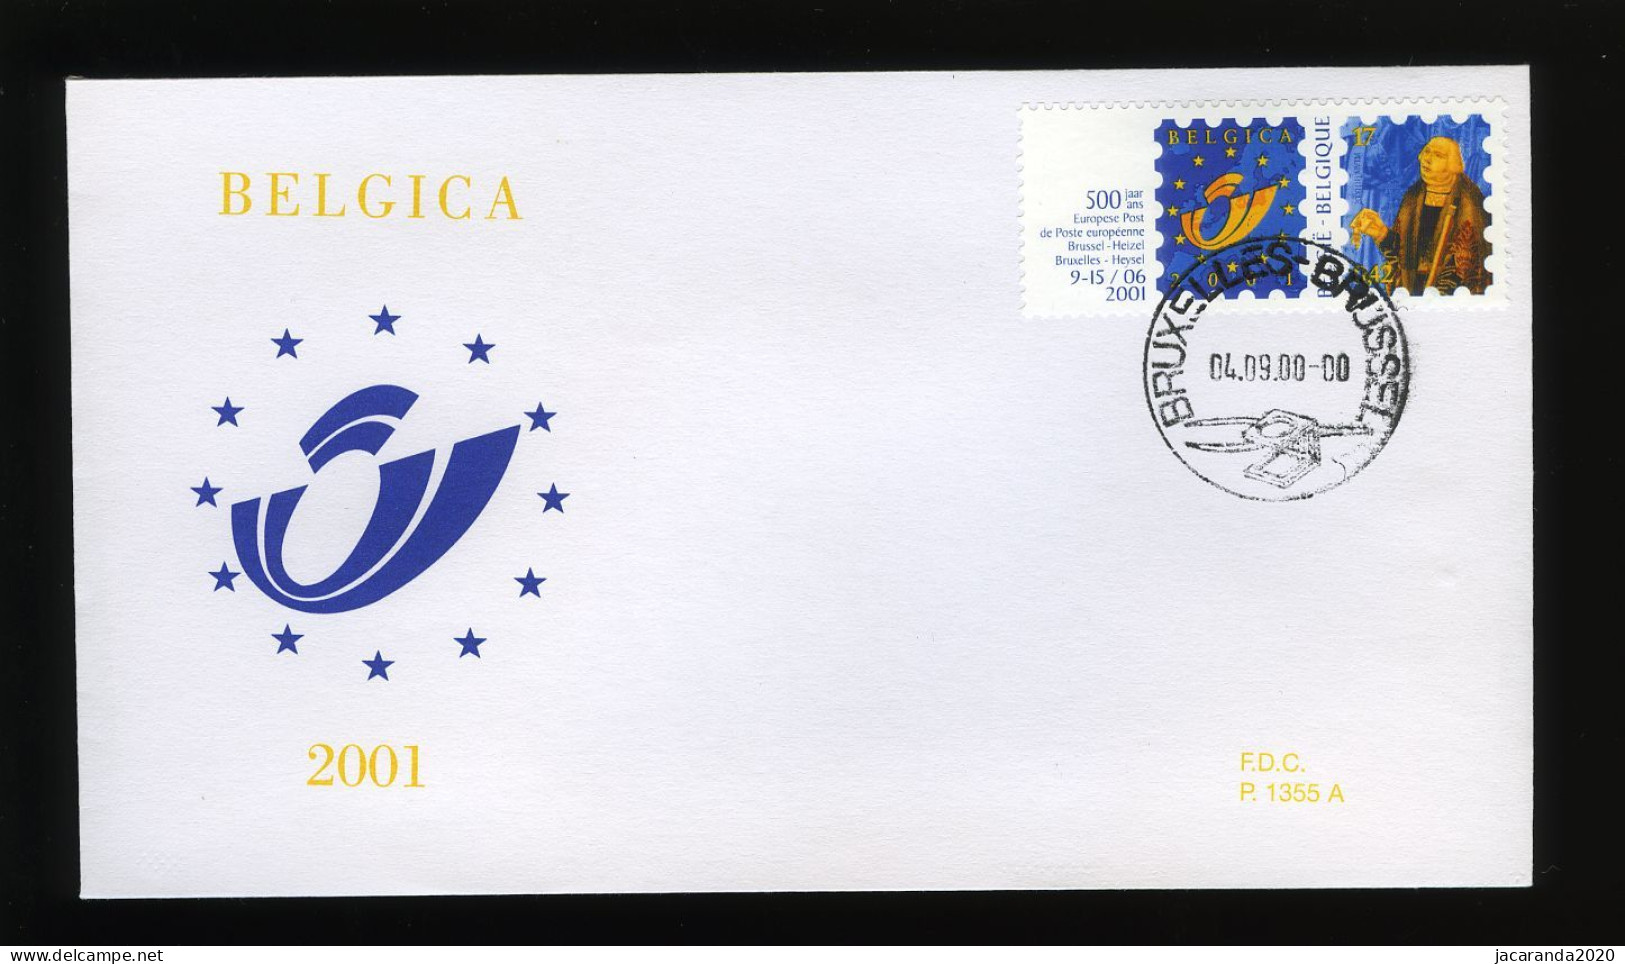 België 2932 - FDC - Rolzegel - Belgica 2001 #1 P1355A - Stempel: Bruxelles-Brussel - 1991-2000